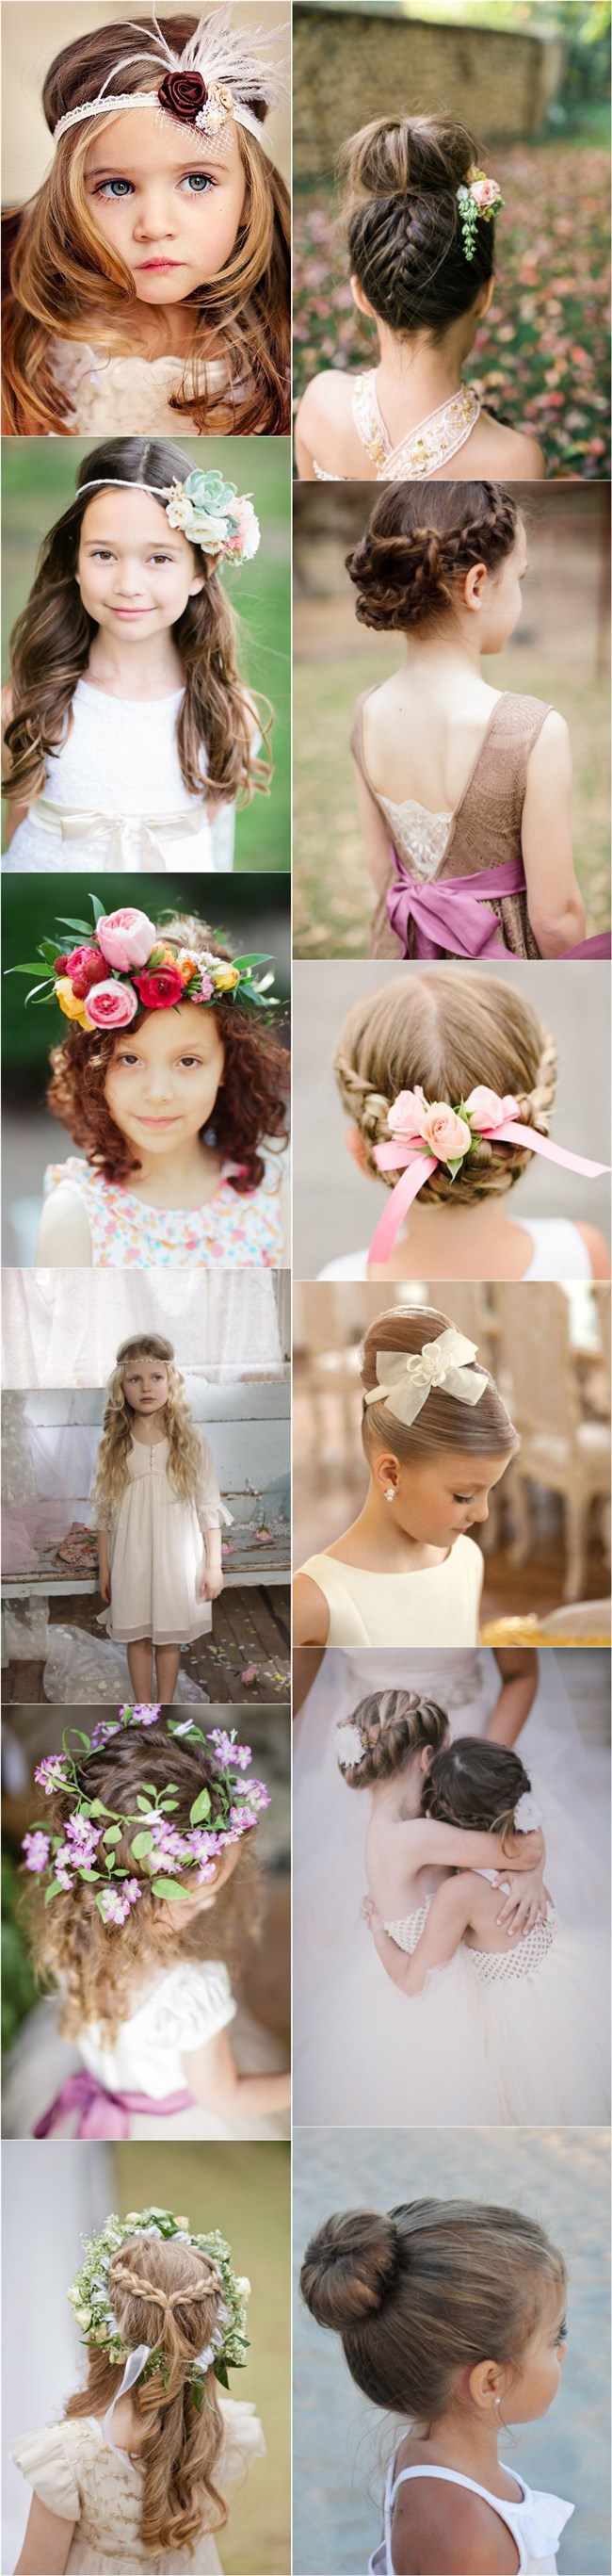 cute little girl hairstyles-updos, braids, waterfall